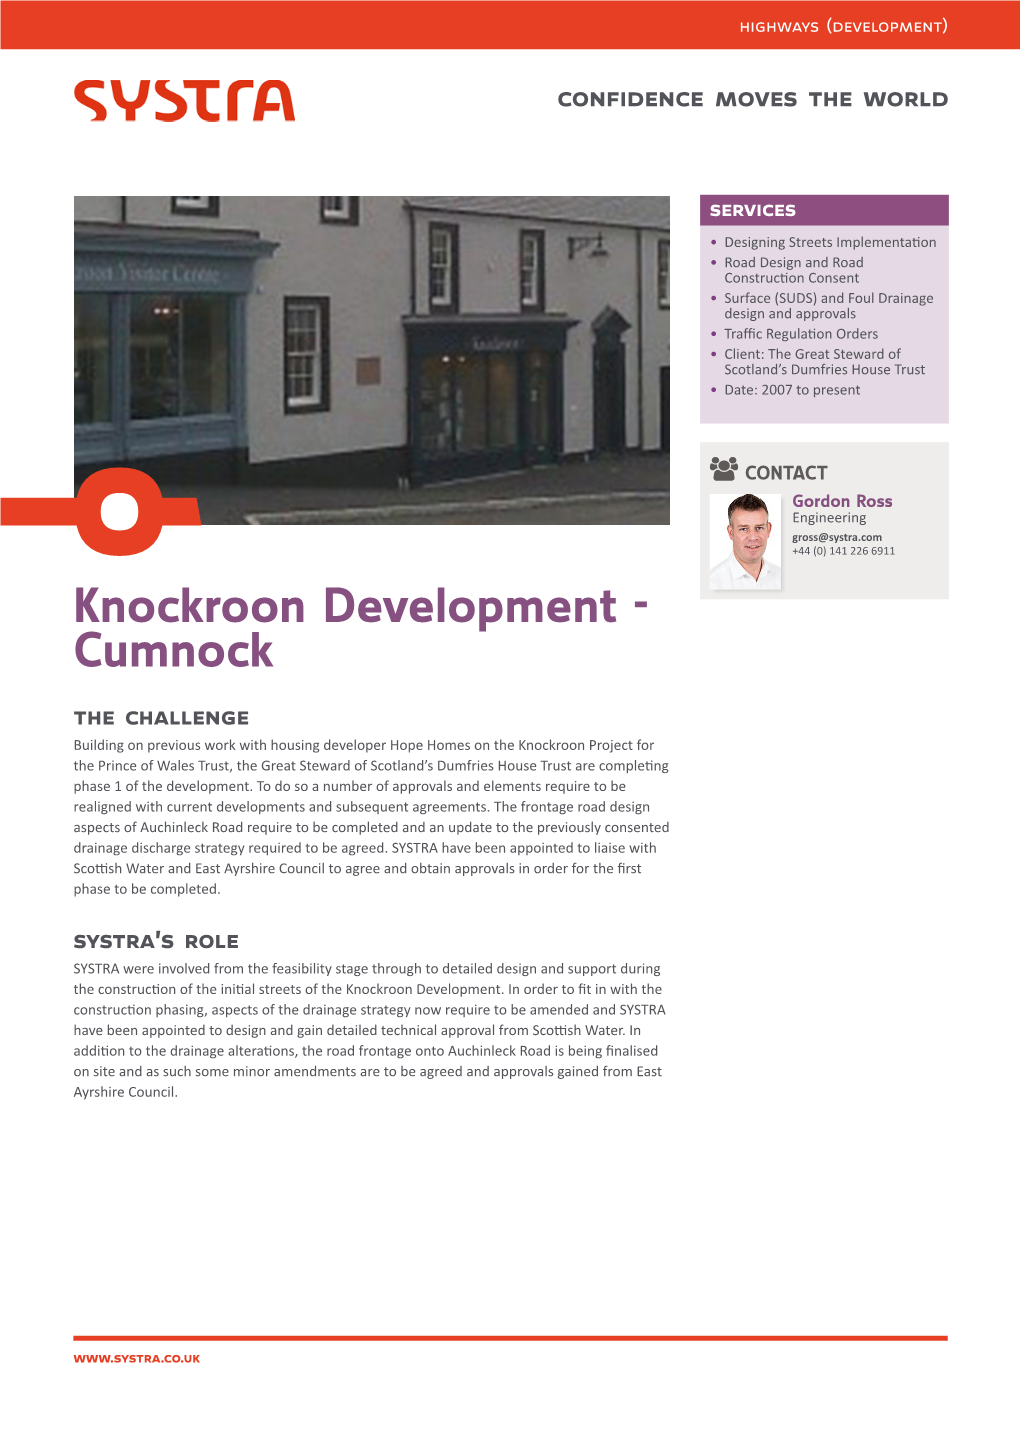 Knockroon Development